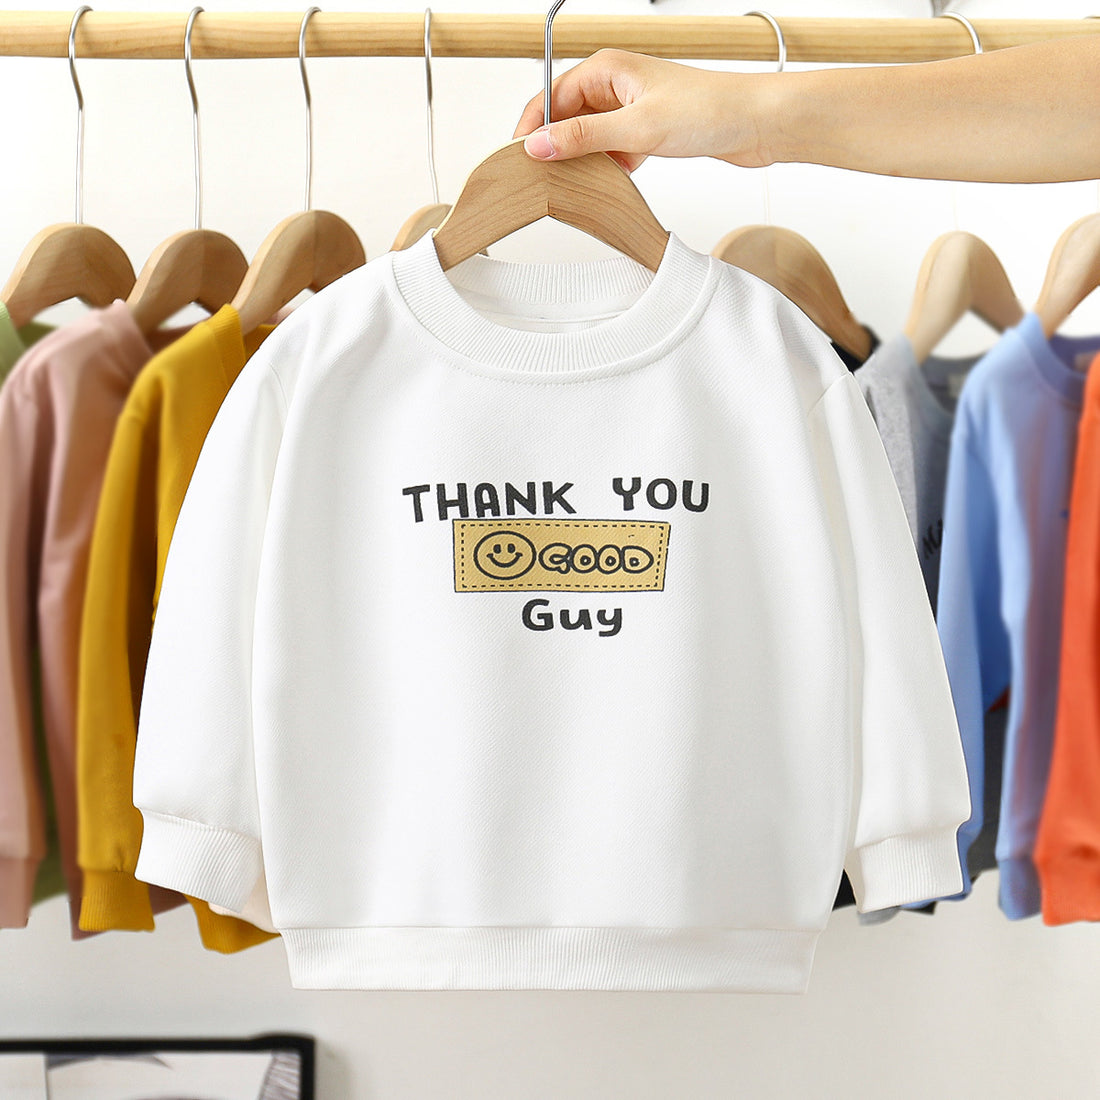 [351276] - Atasan Sweater Import Anak Cowok Cewek - Motif Thank You